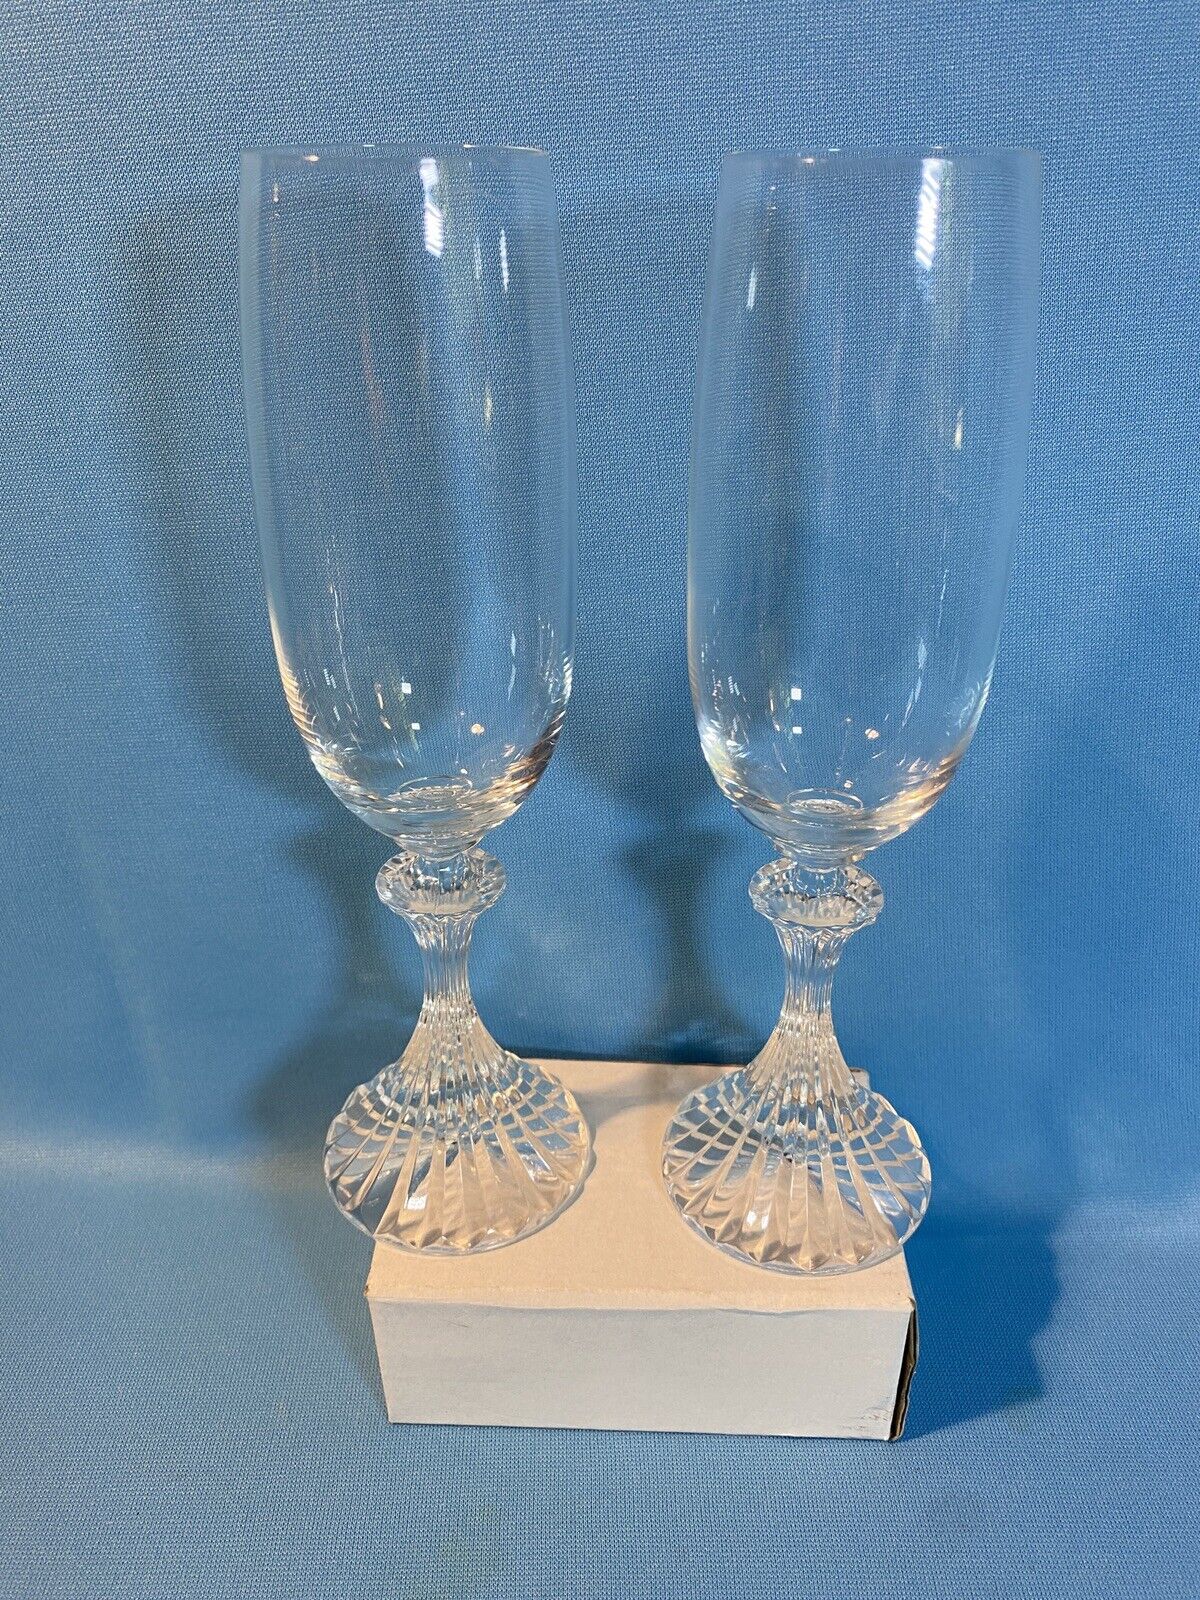 2 Mikasa The Ritz Crystal Champagne Flutes Glasses